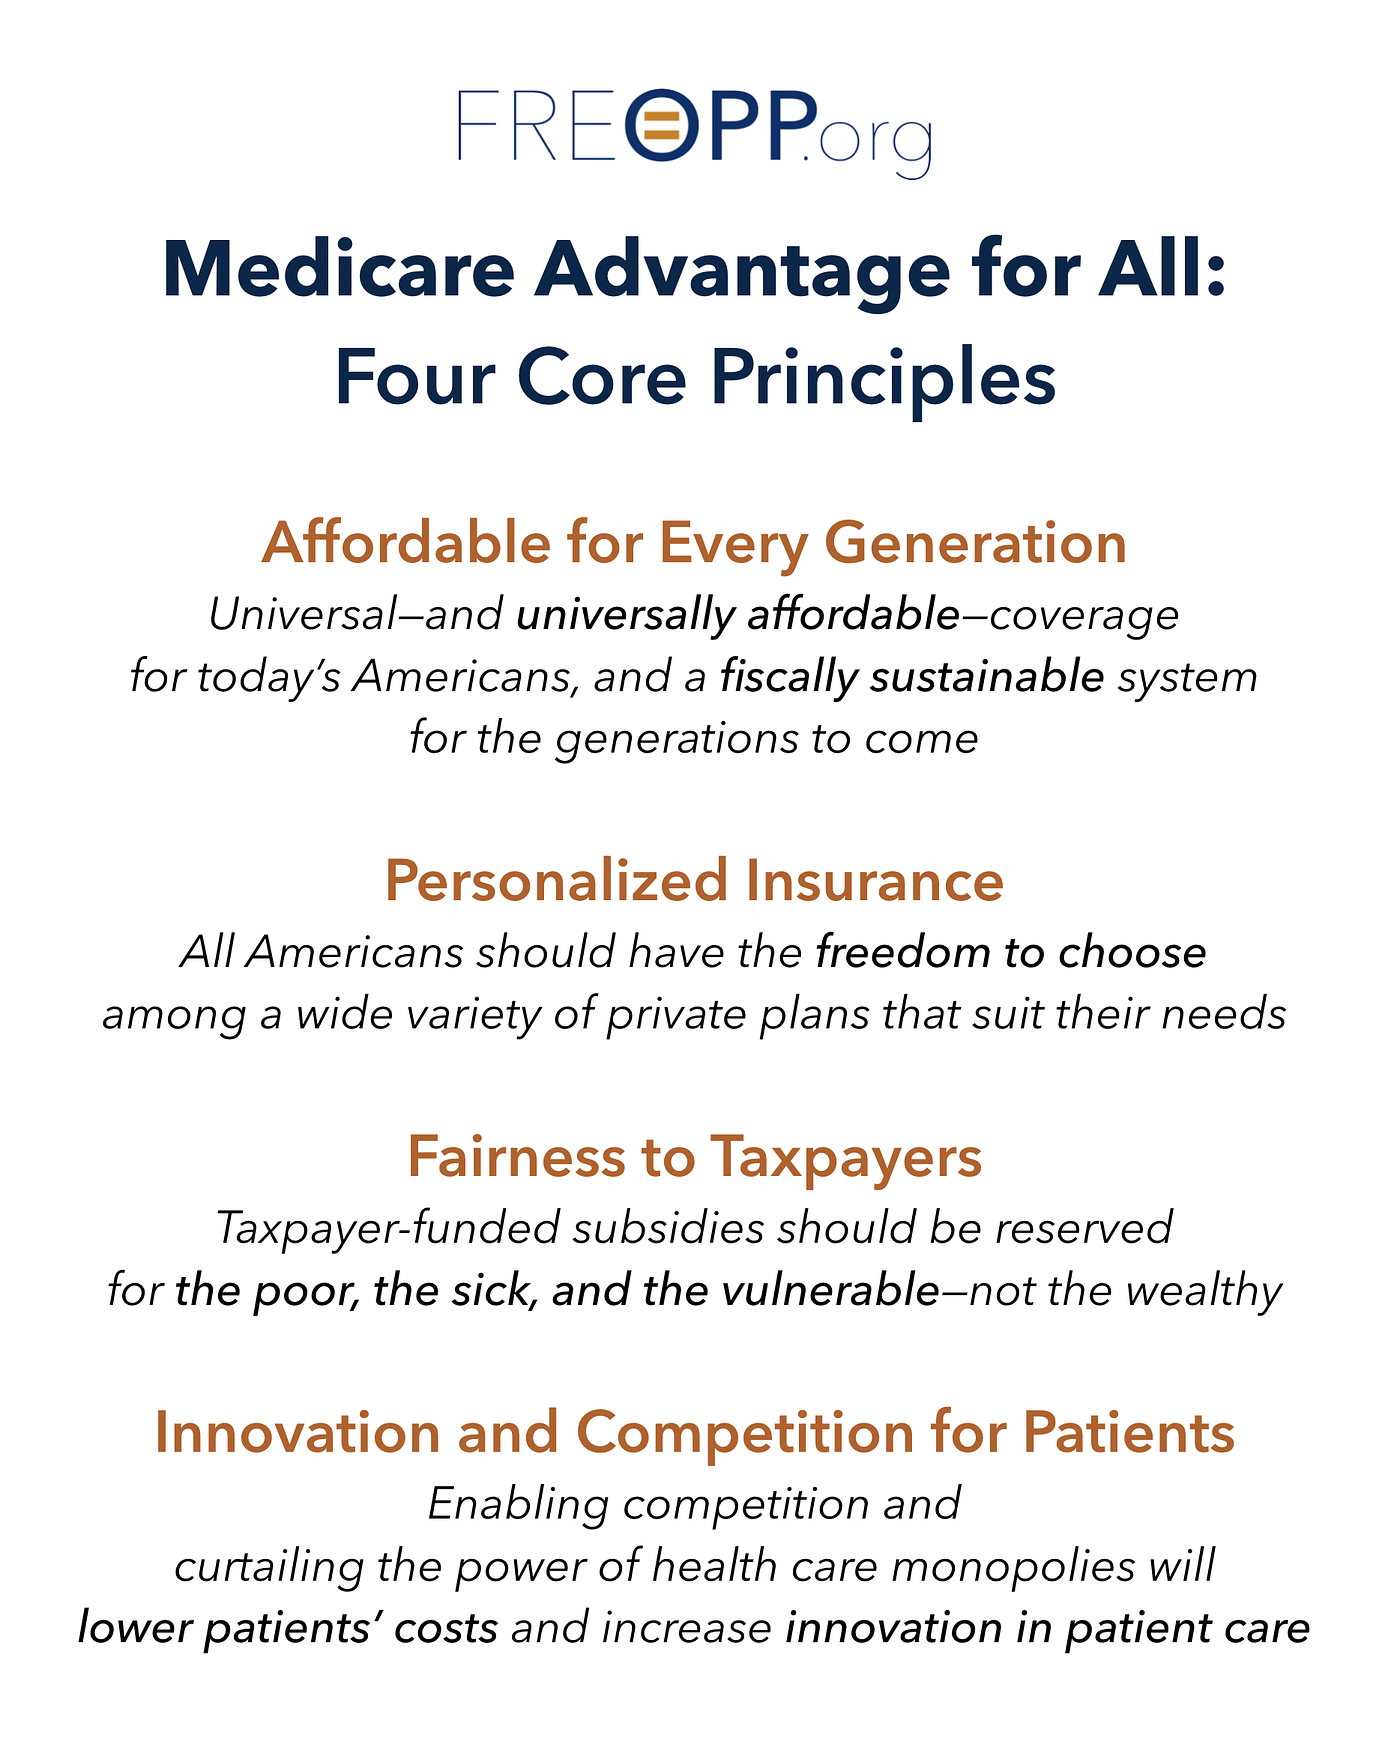 Paul B Insurance Medicare Advantage Plans Melville